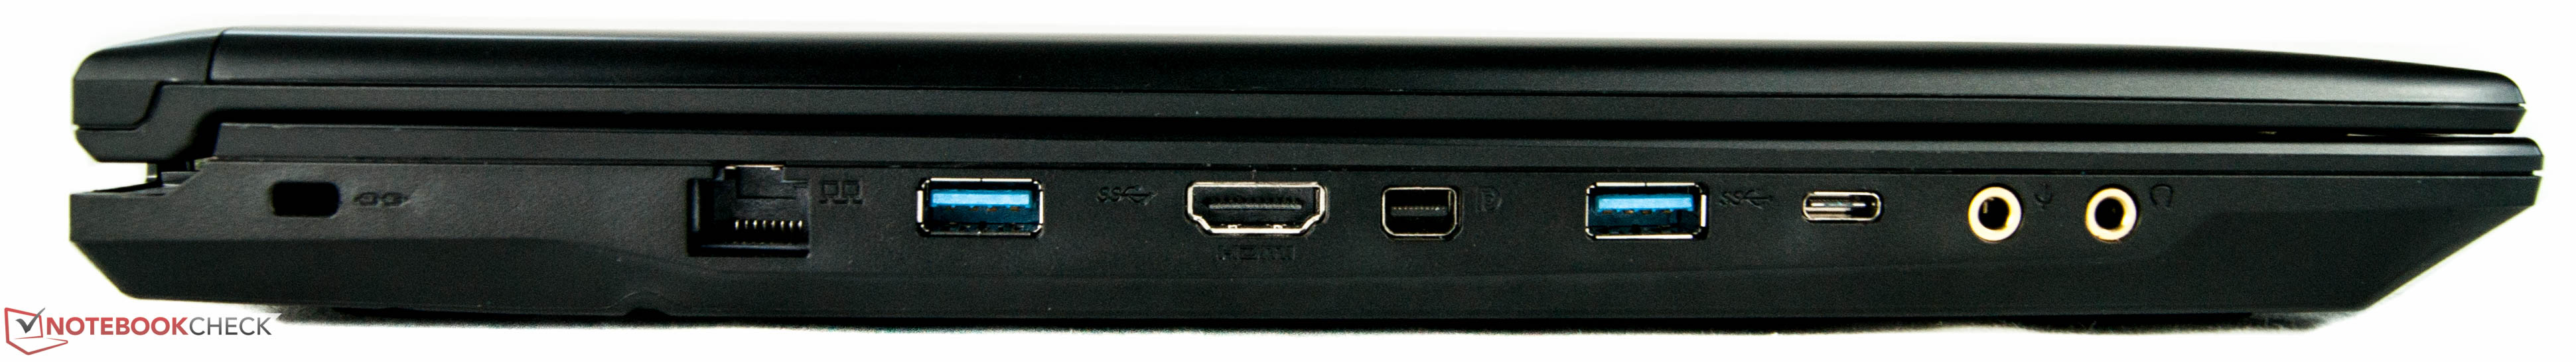 links: Kesington-Lock, Ethernet-Anschluss, USB 3.0, HDMI-Ausgang, MiniDisplayPort, USB 3.0, USB Typ C, Mikrofon-Eingang, Kopfhörer-Ausgang